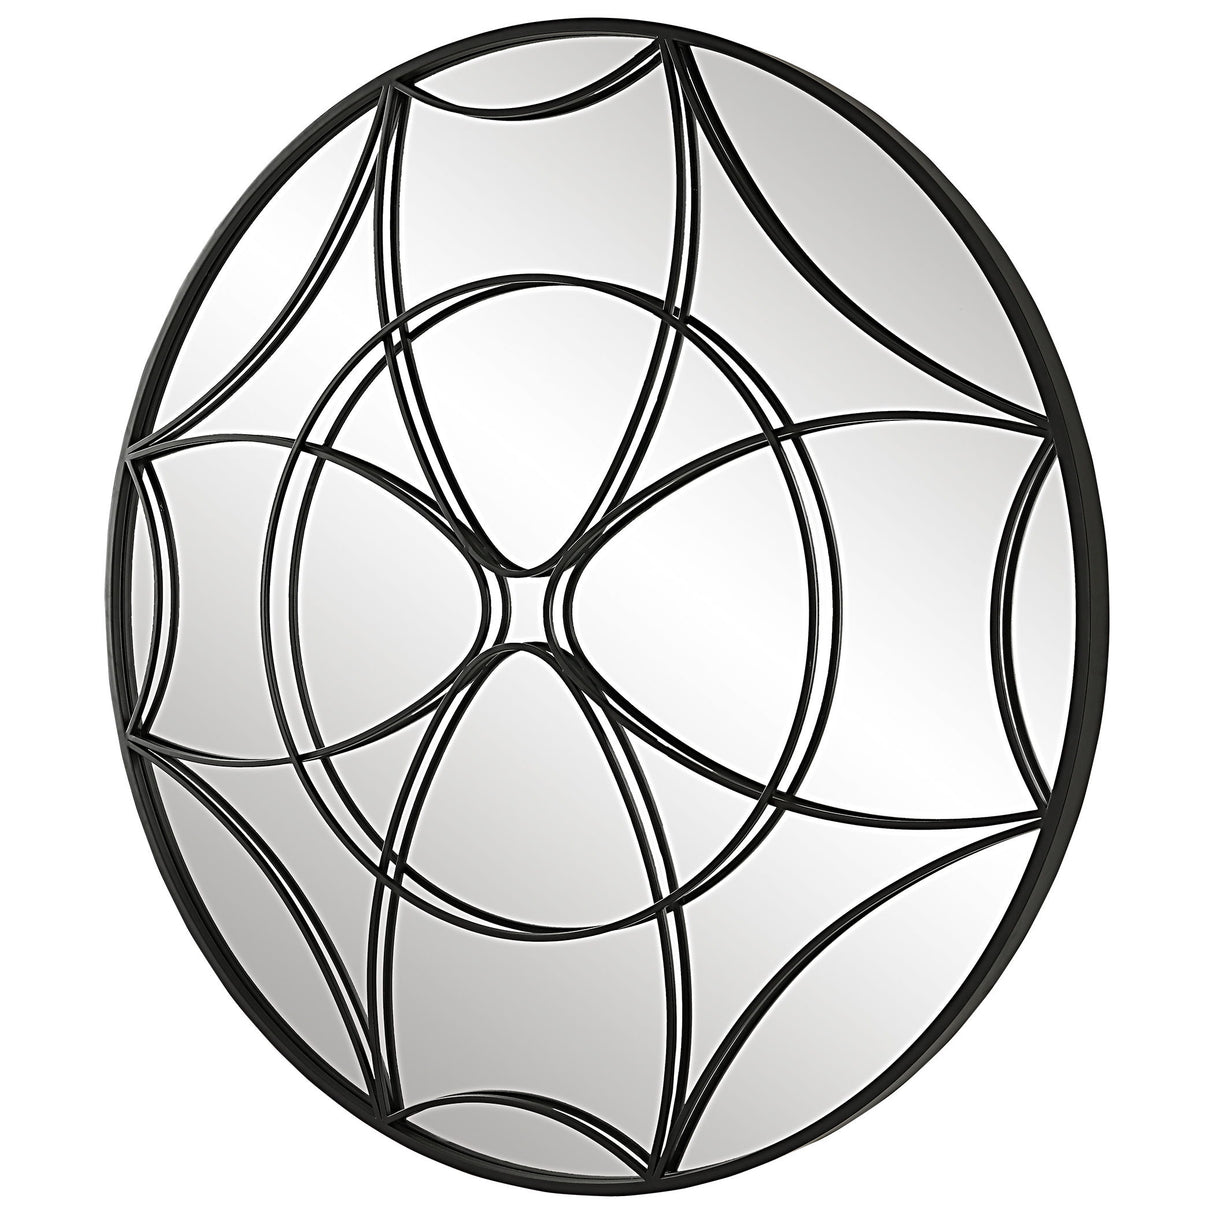 Jocasta - Mirrored Circular Wall Decor - Black